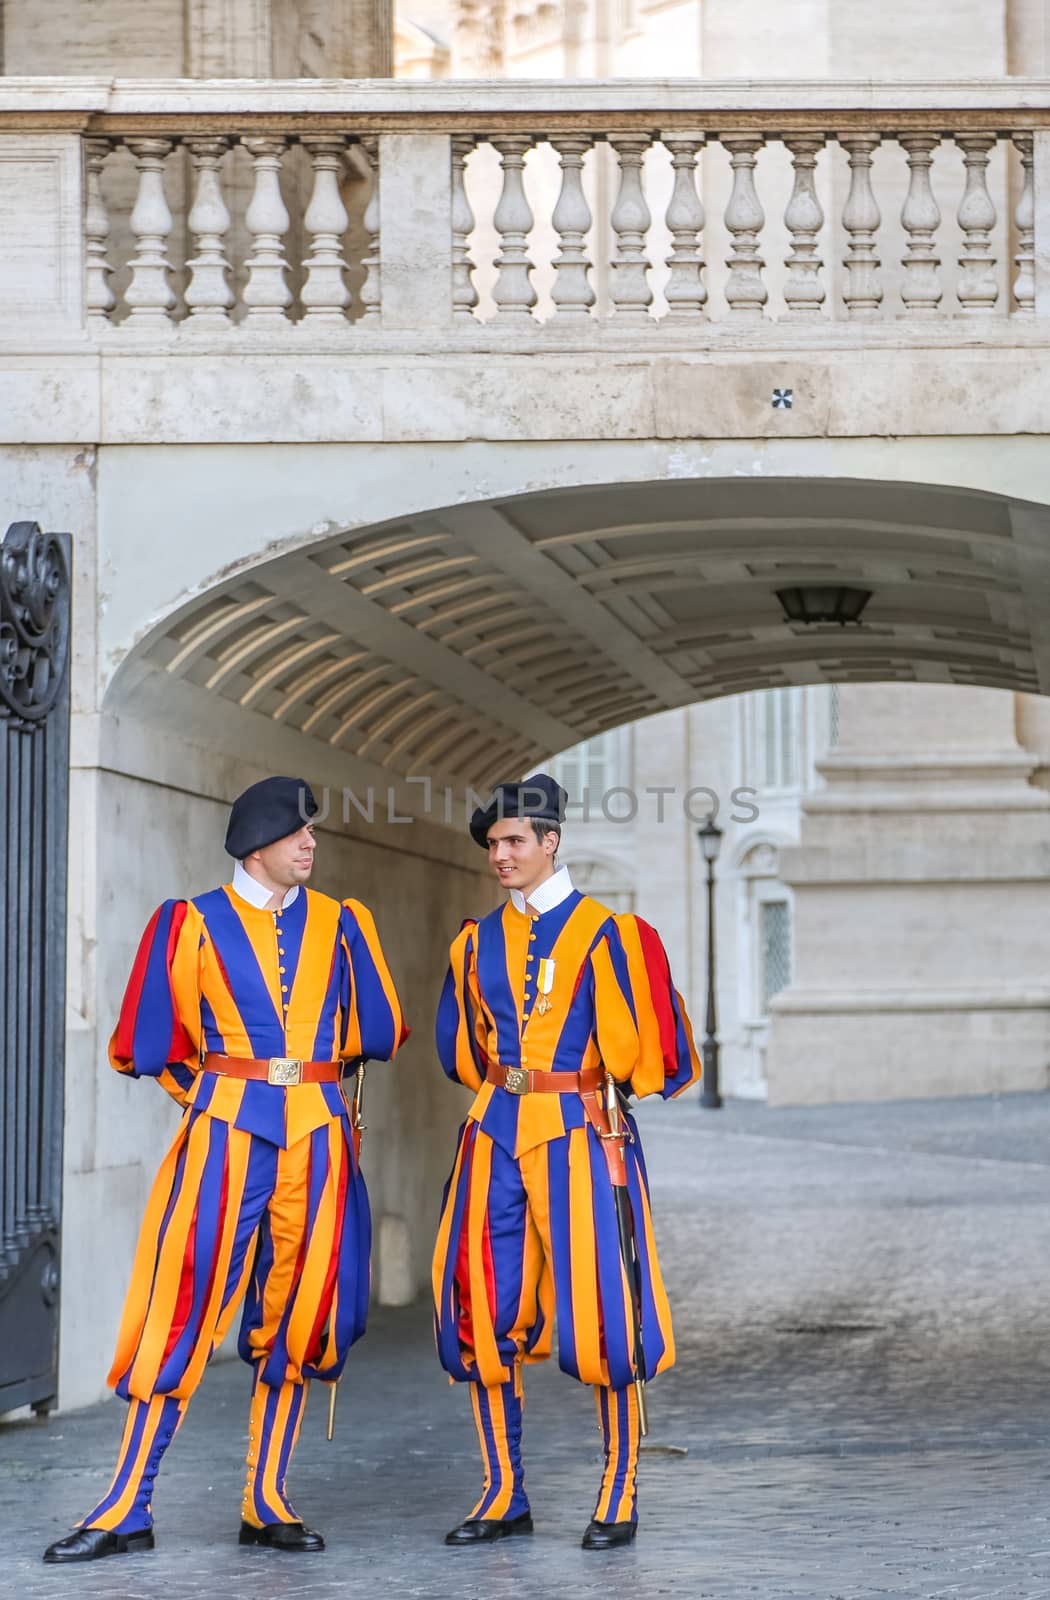 Vatican, Italy - June 26, 2014: Members of the Pontifical Swiss Guard stand guard in Saint Peters Basilica in Vatican